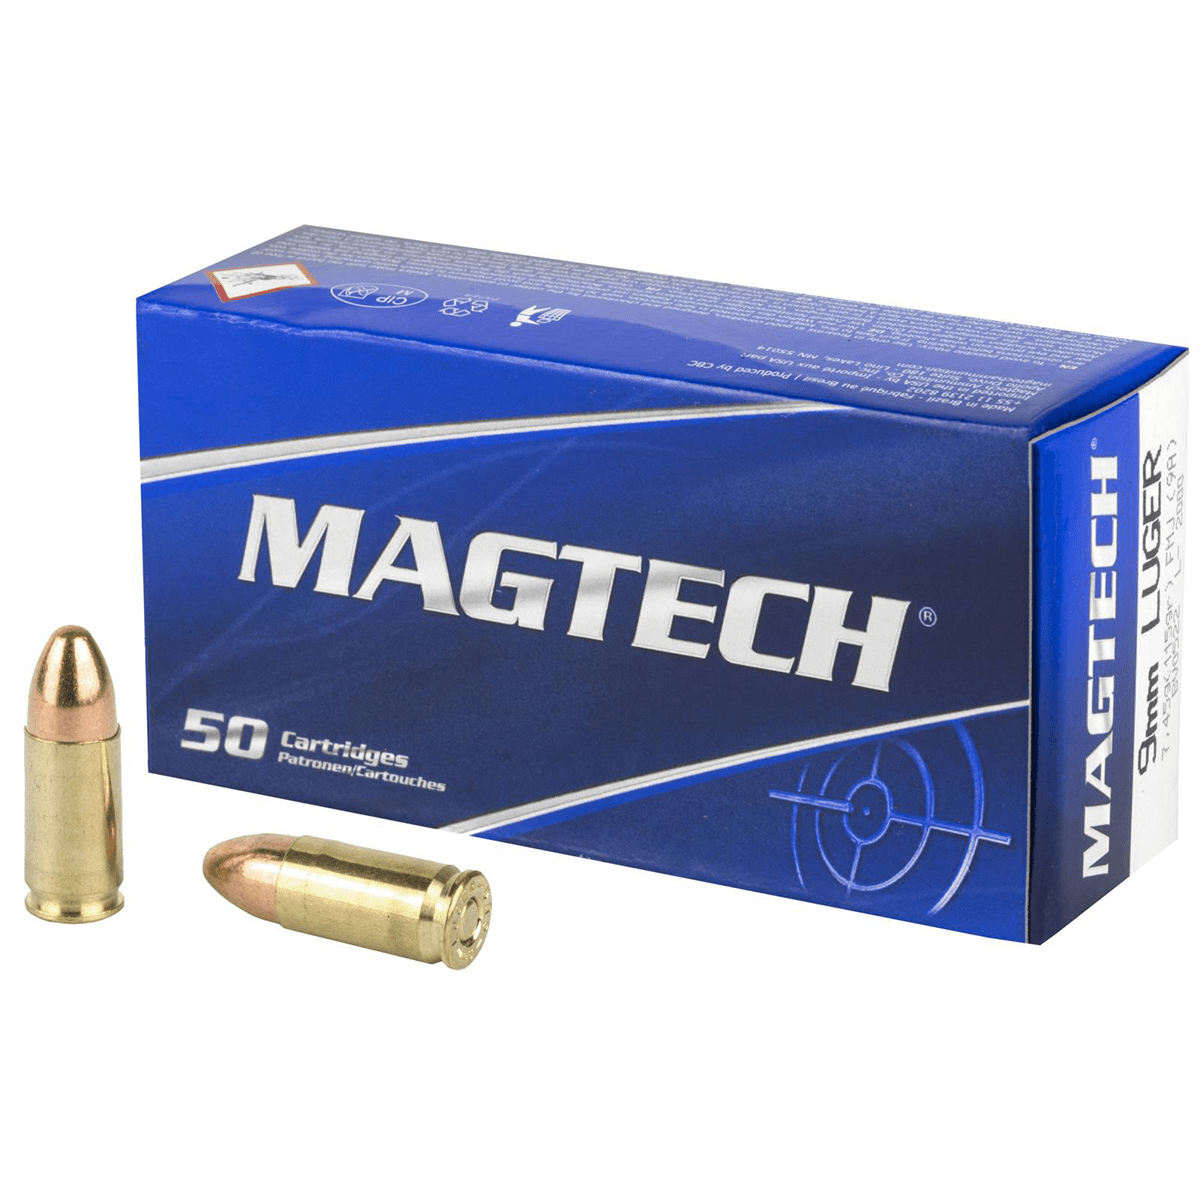 Magtech 9mm 115 Grain FMJ Ammo 50 Round Box